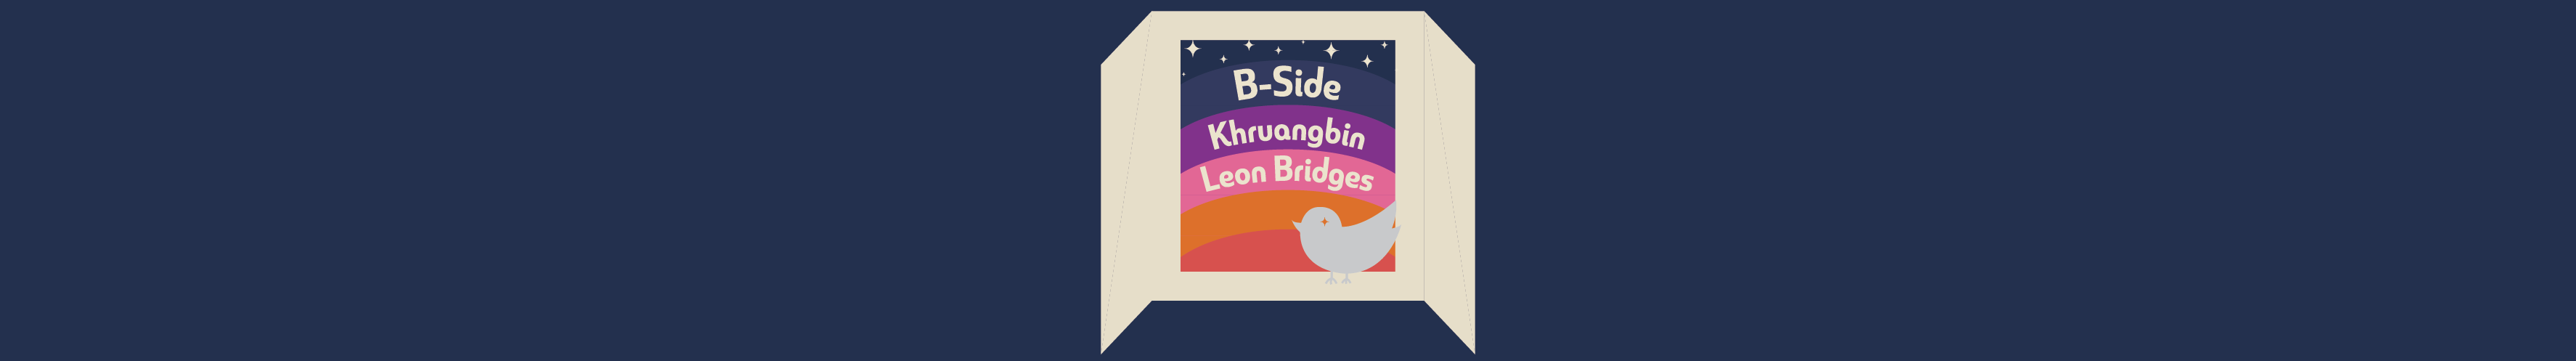 B-Side, Khruangbin, Leon Bridges, Texas Moon